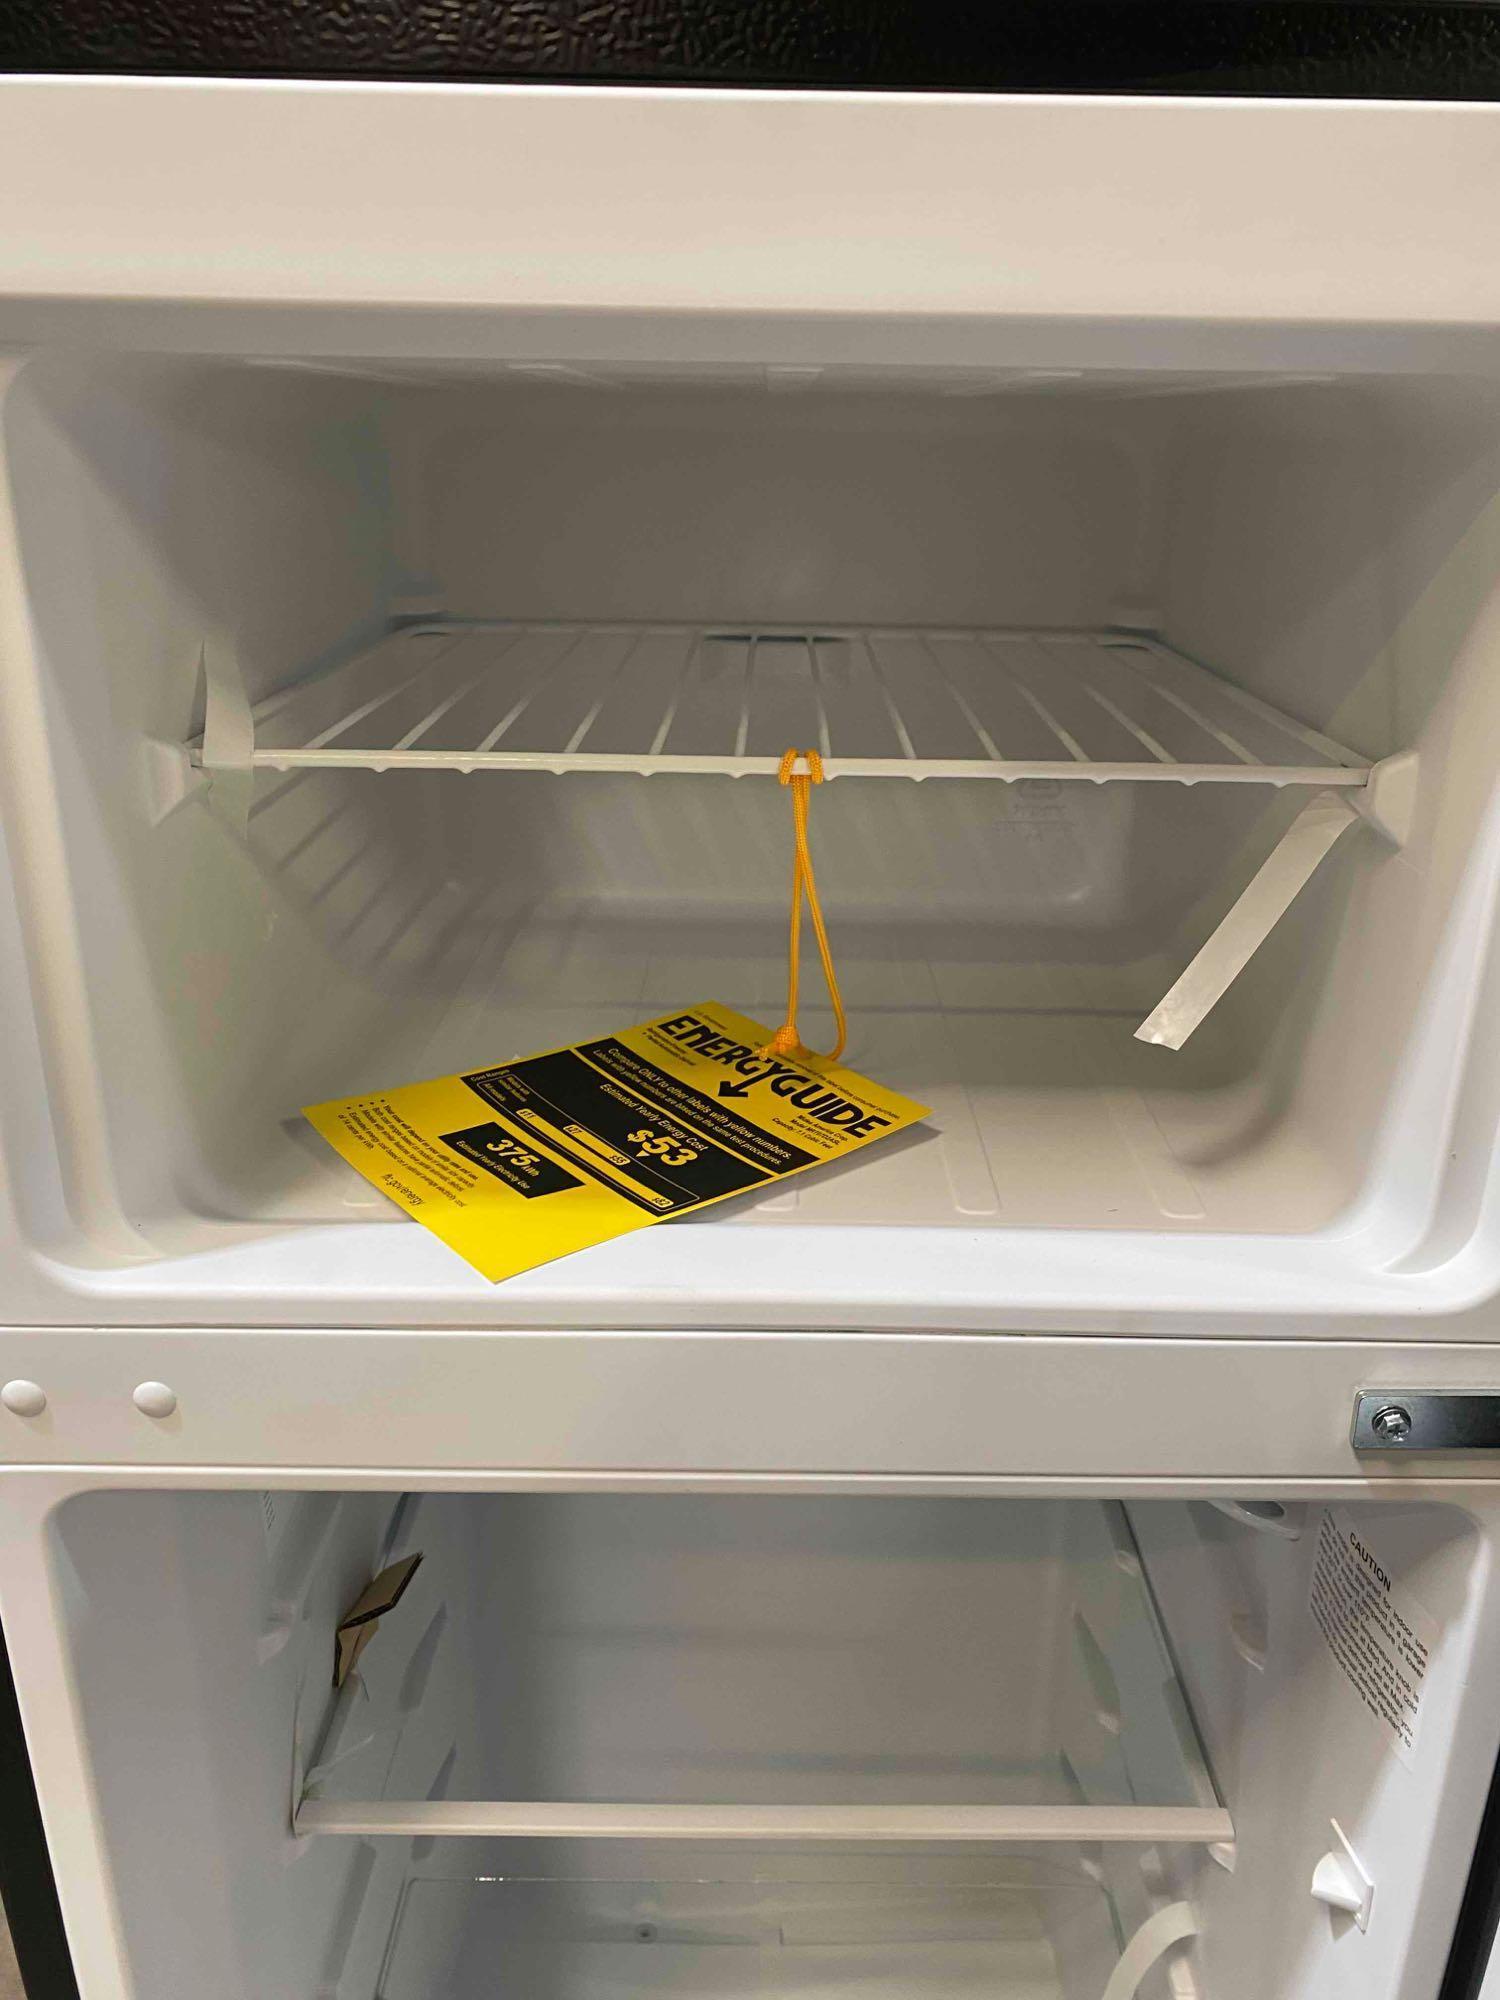 MIDEA Refrigerator/Freezer